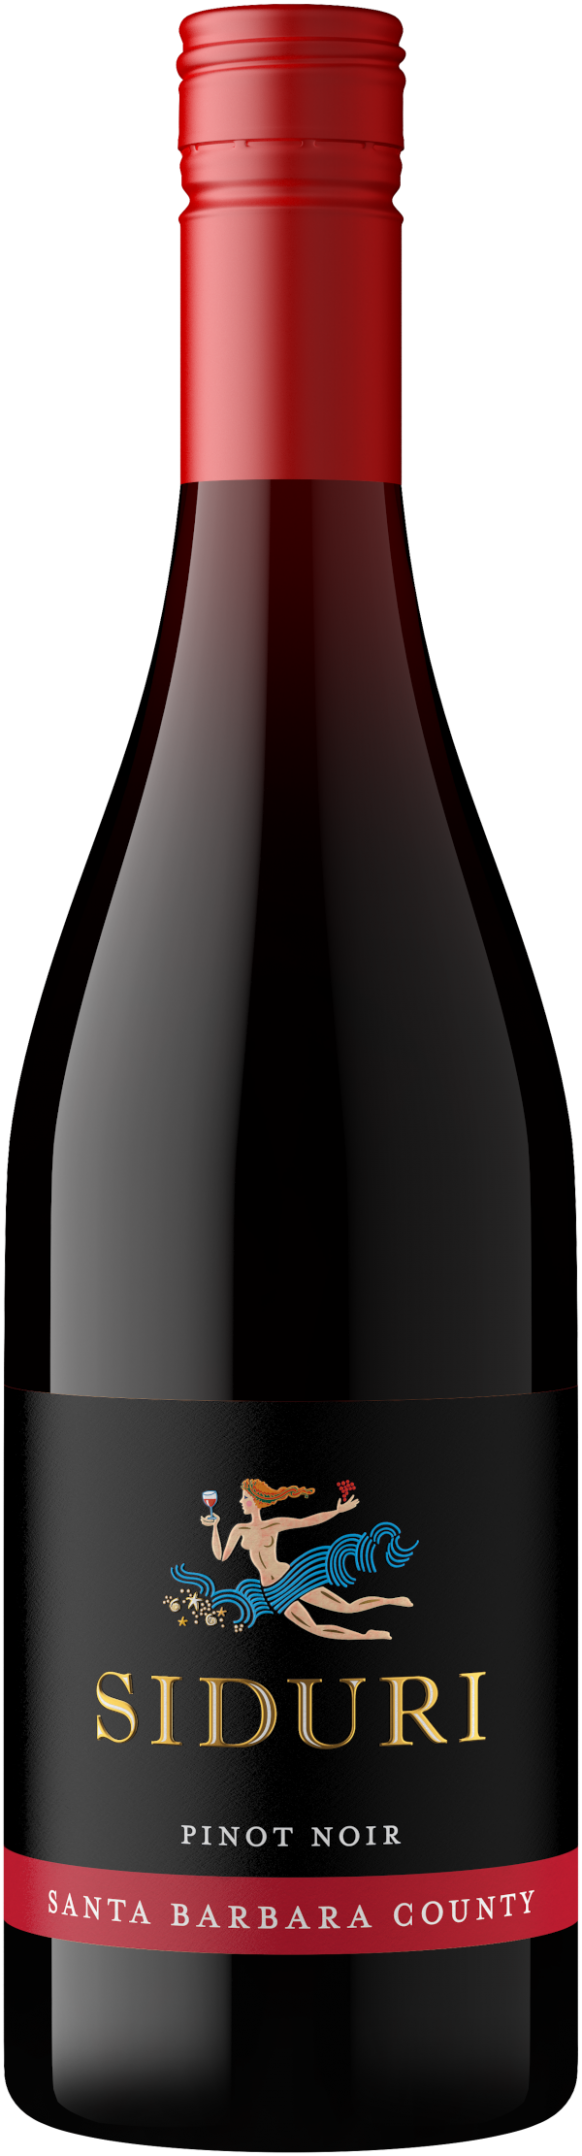 Siduri Santa Barbara County Pinot Noir